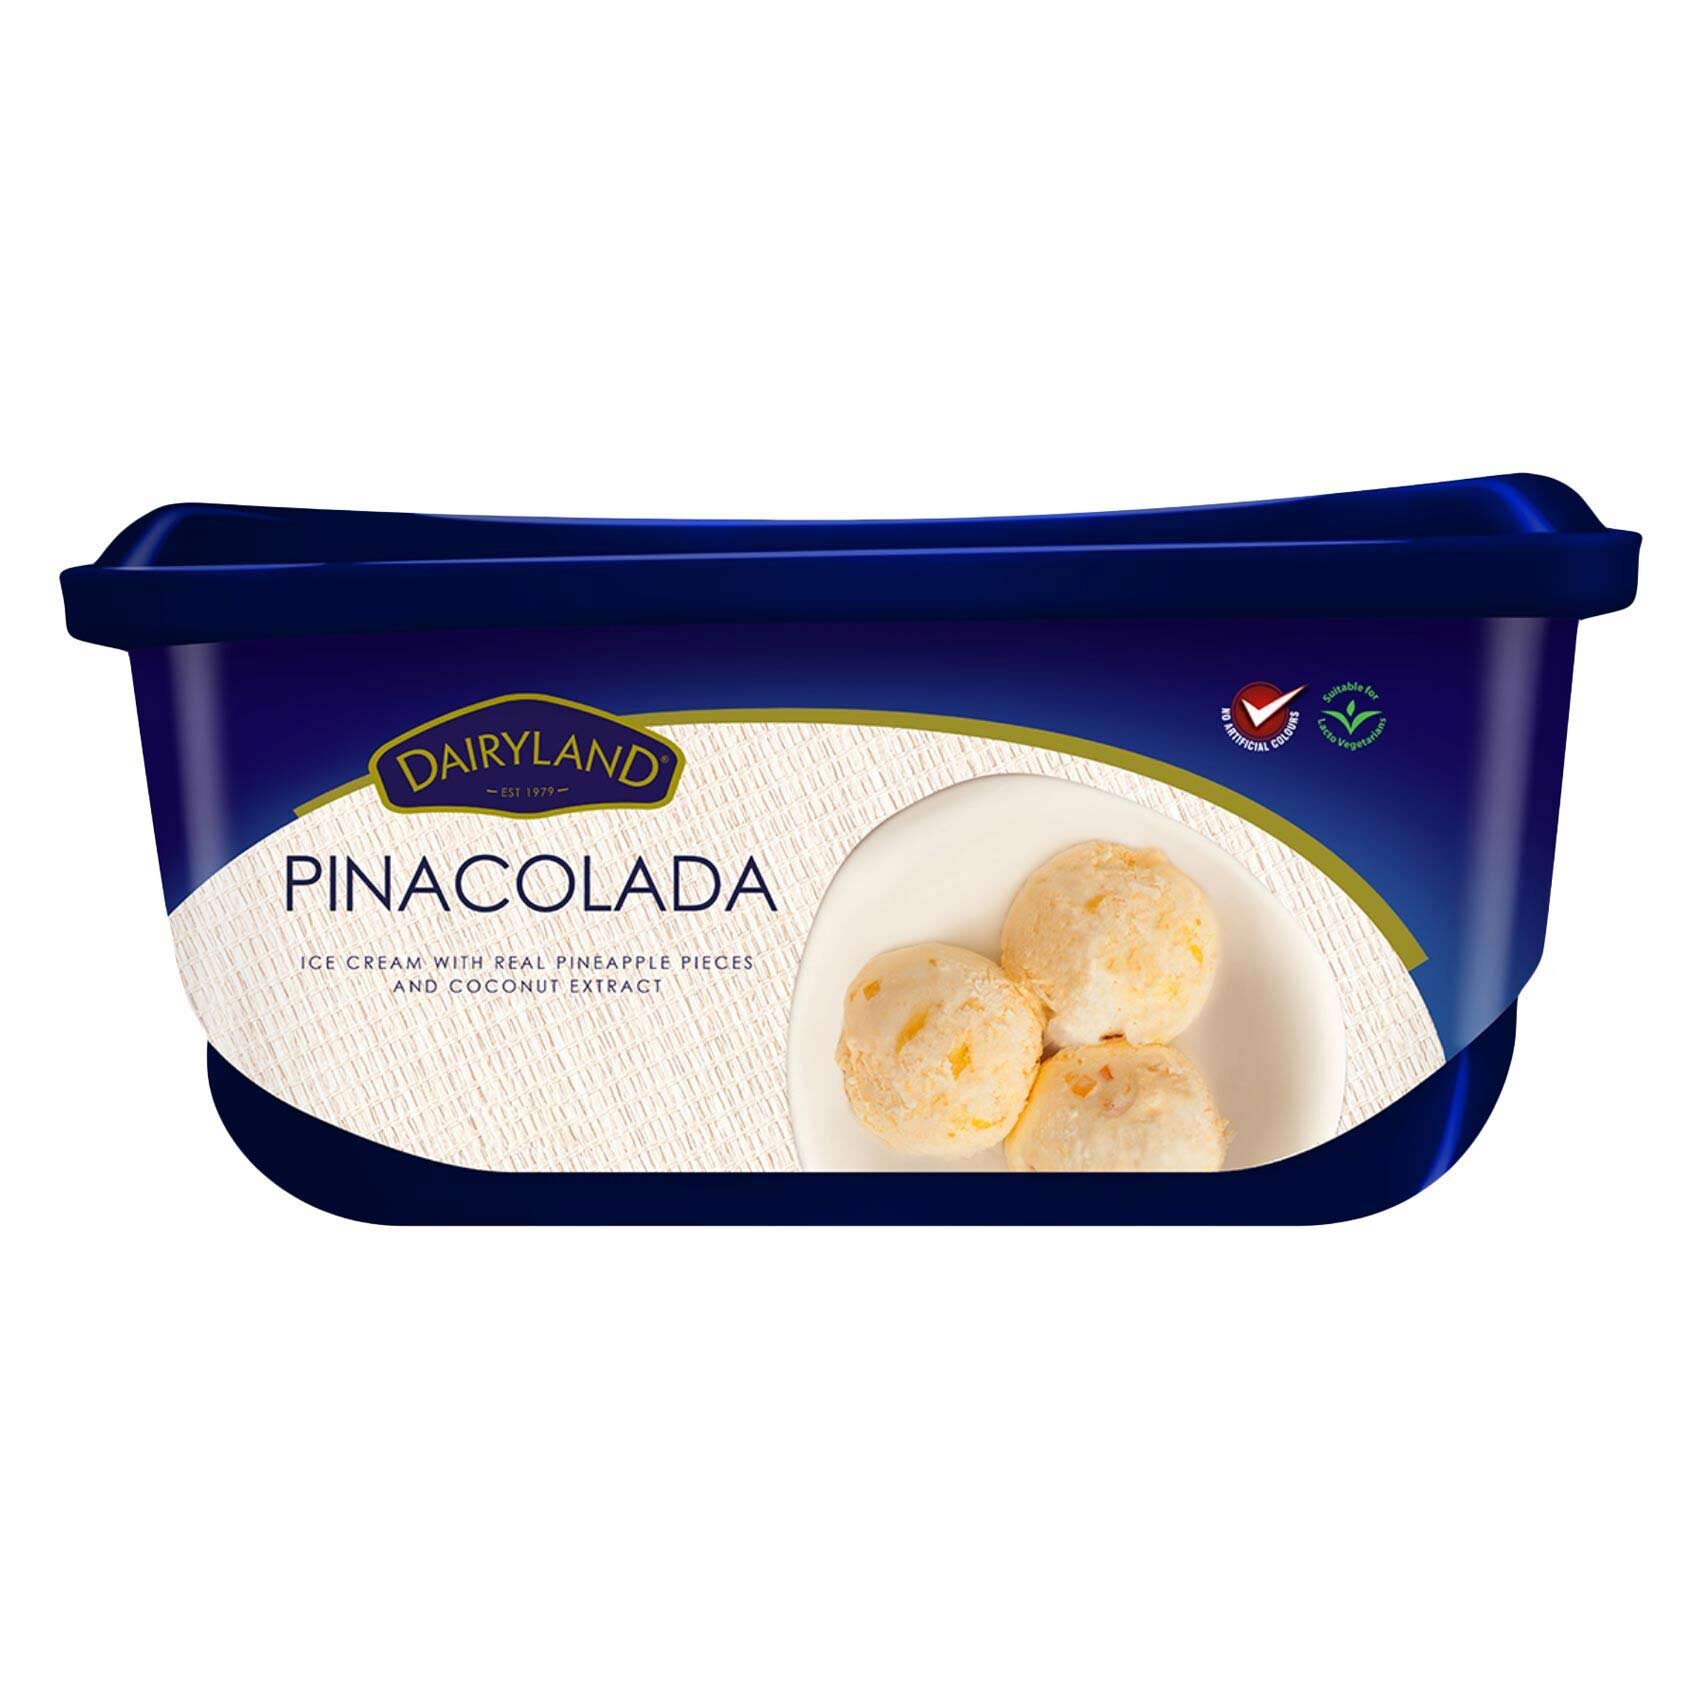 Dairyland Pina Colada Ice Cream 500ml